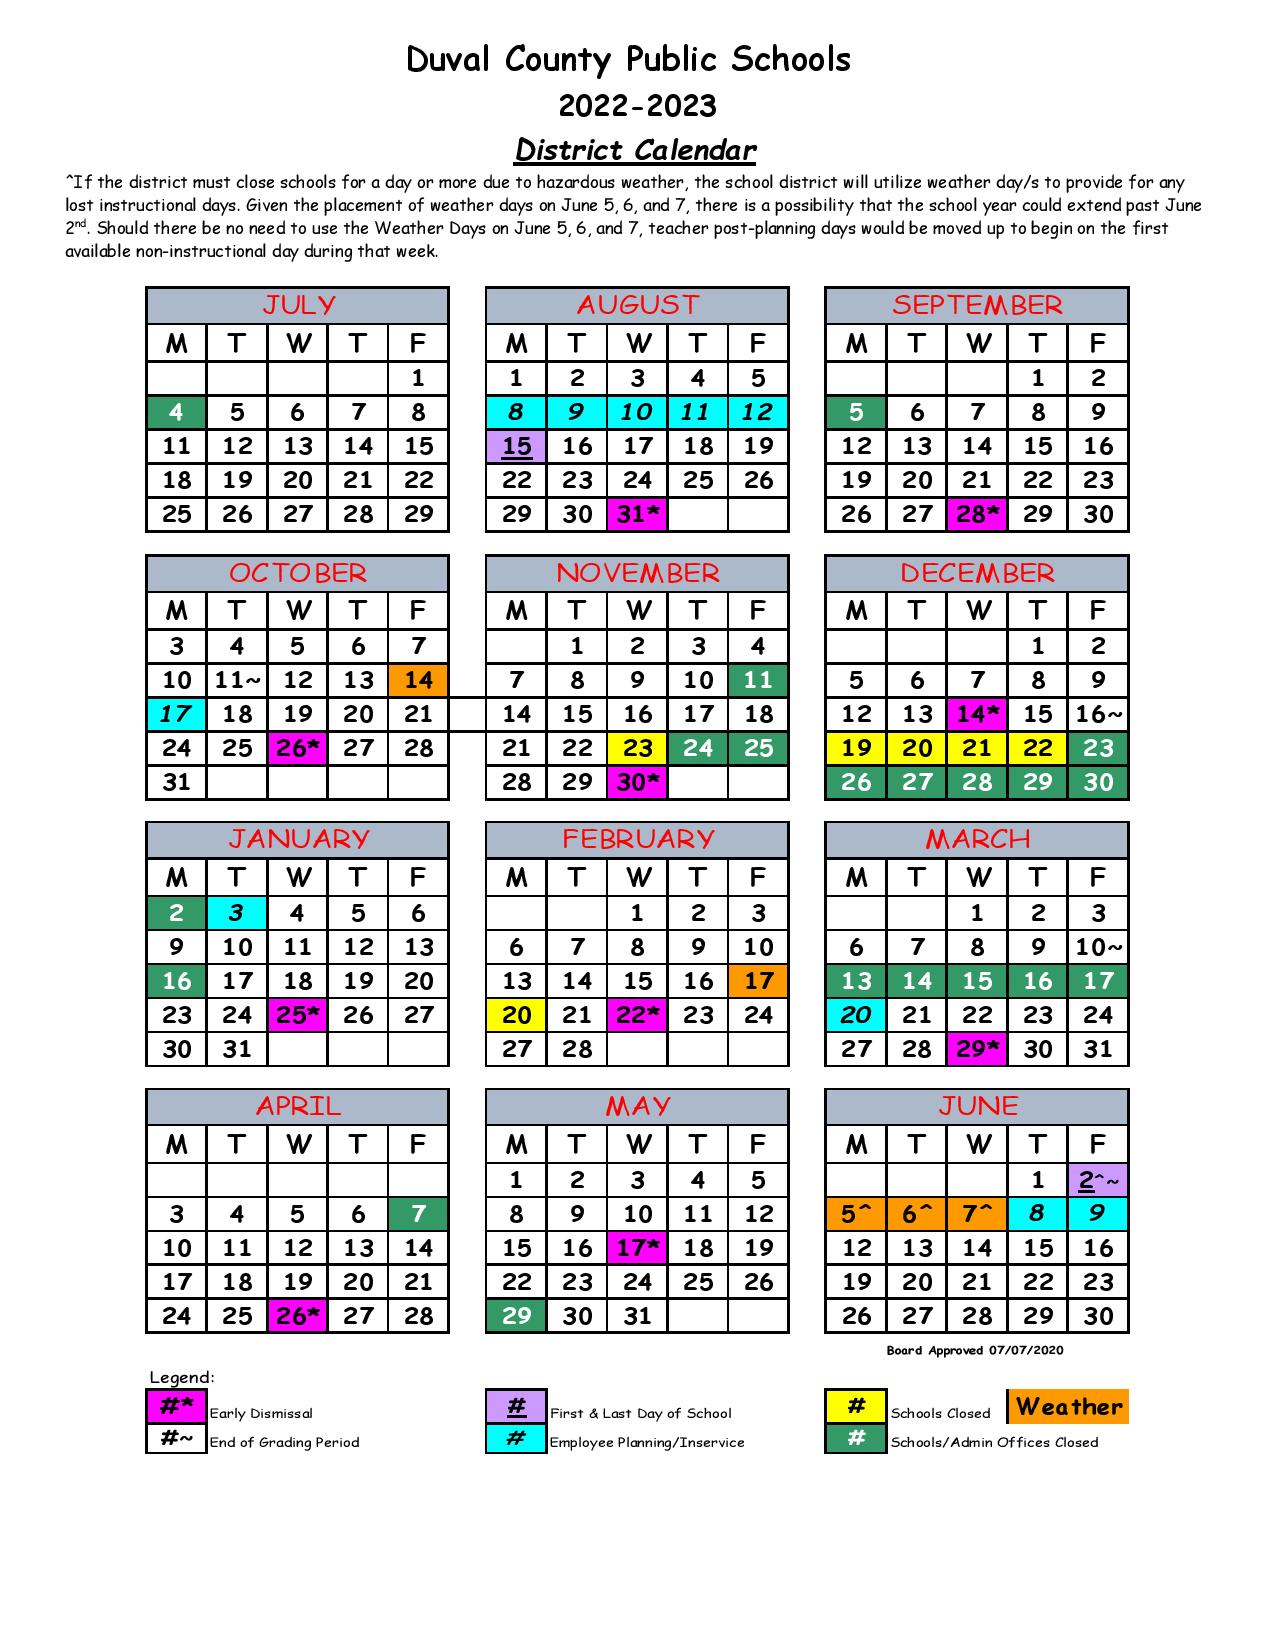 Duval County Public Schools Calendar 20222023 in PDF